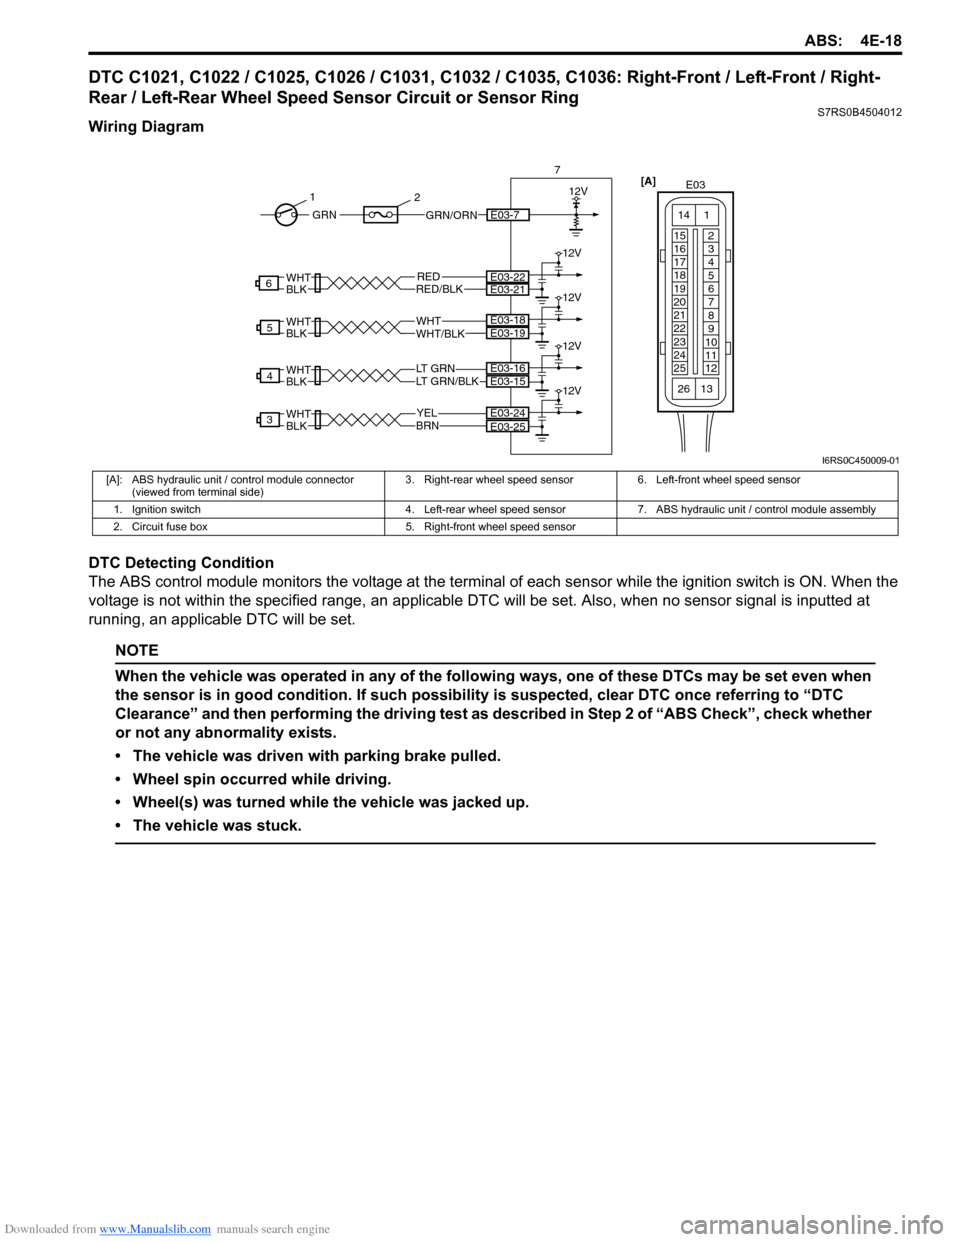 SUZUKI SWIFT 2006 2.G Service Service Manual Downloaded from www.Manualslib.com manuals search engine ABS: 4E-18
DTC C1021, C1022 / C1025, C1026 / C1031, C1032 / C1035, C1036: Right-Front / Left-Front / Right-
Rear / Left-Rear Wheel Speed Sensor